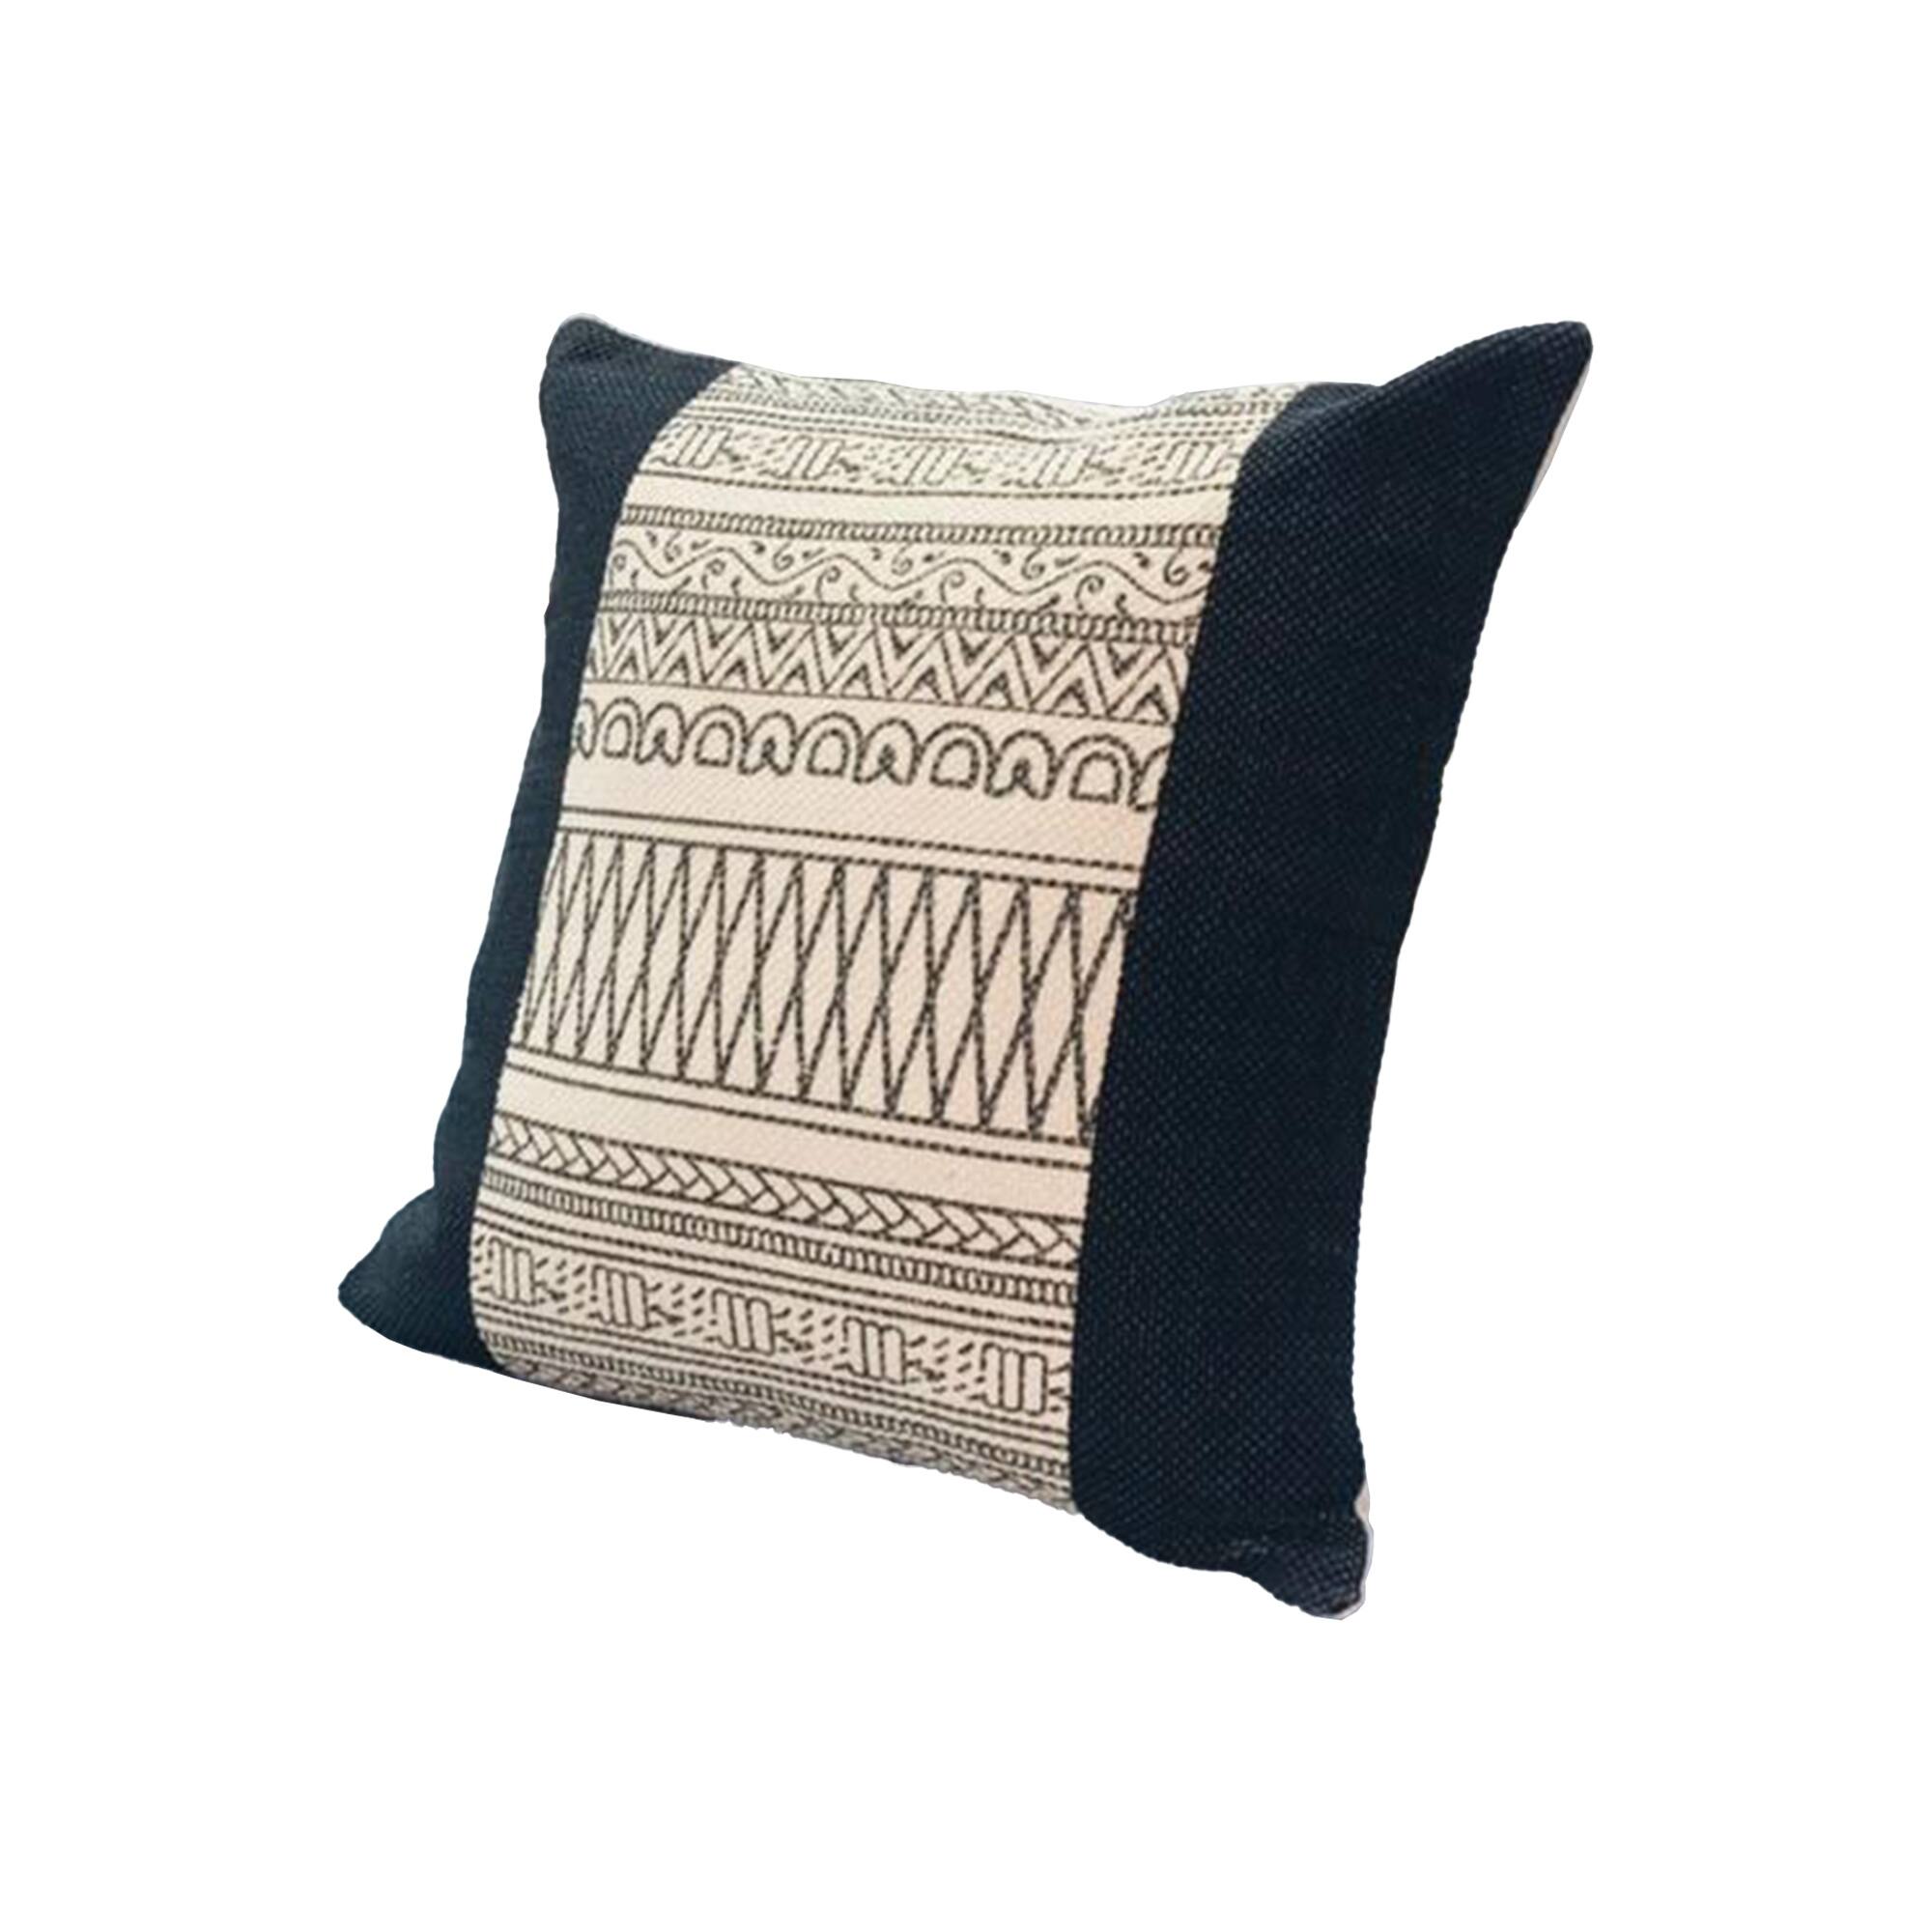 18 x 18 Square Cotton Accent Throw Pillows, Aztec Linework Pattern, Set ...